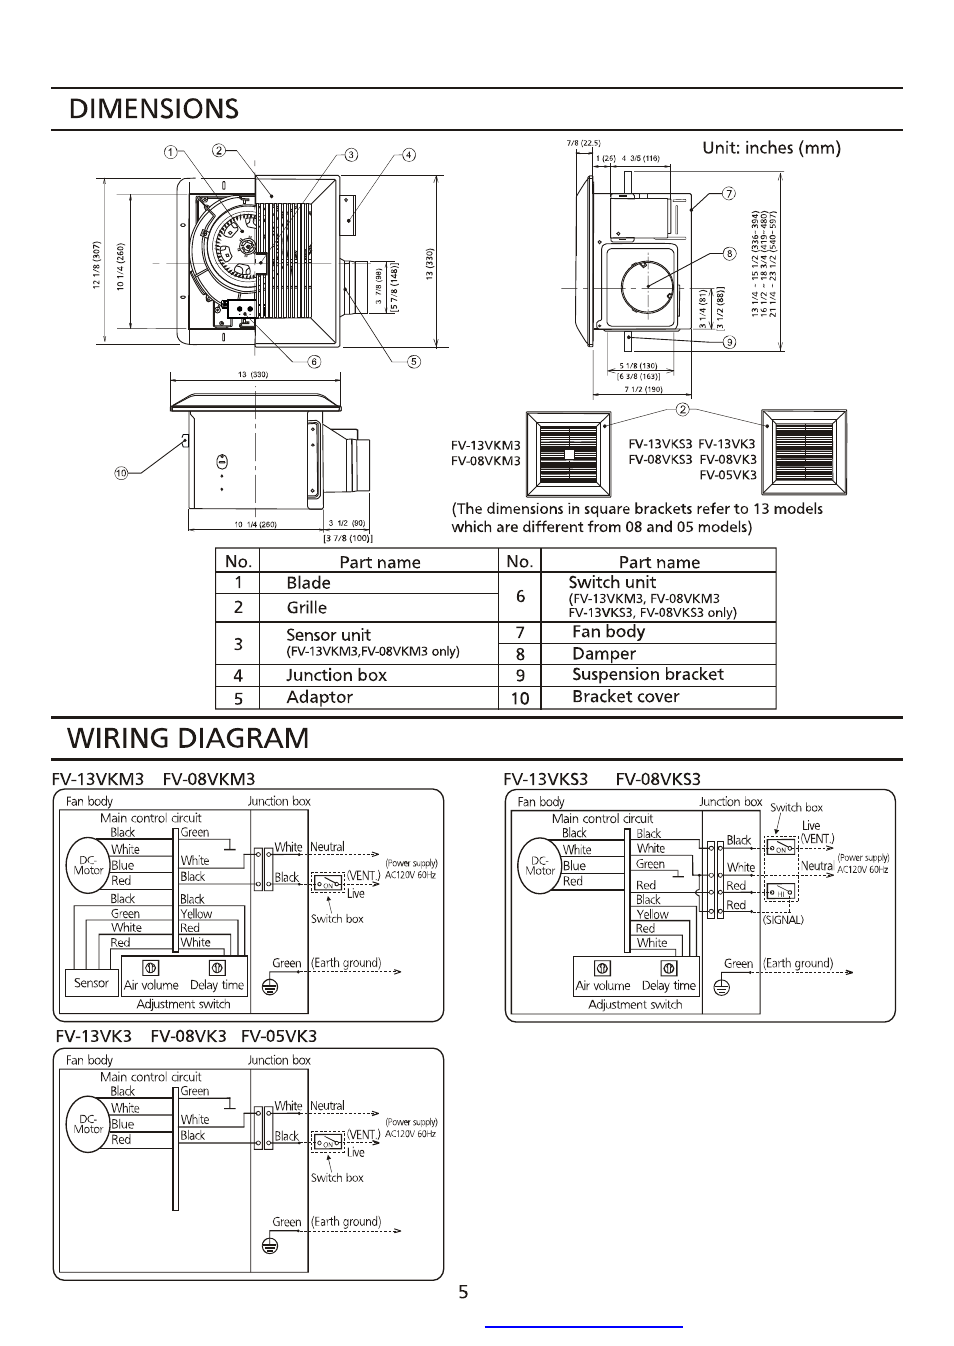 Dimensions, Wiring diagram | Panasonic FV-08VK3 User Manual | Page 5 / 12